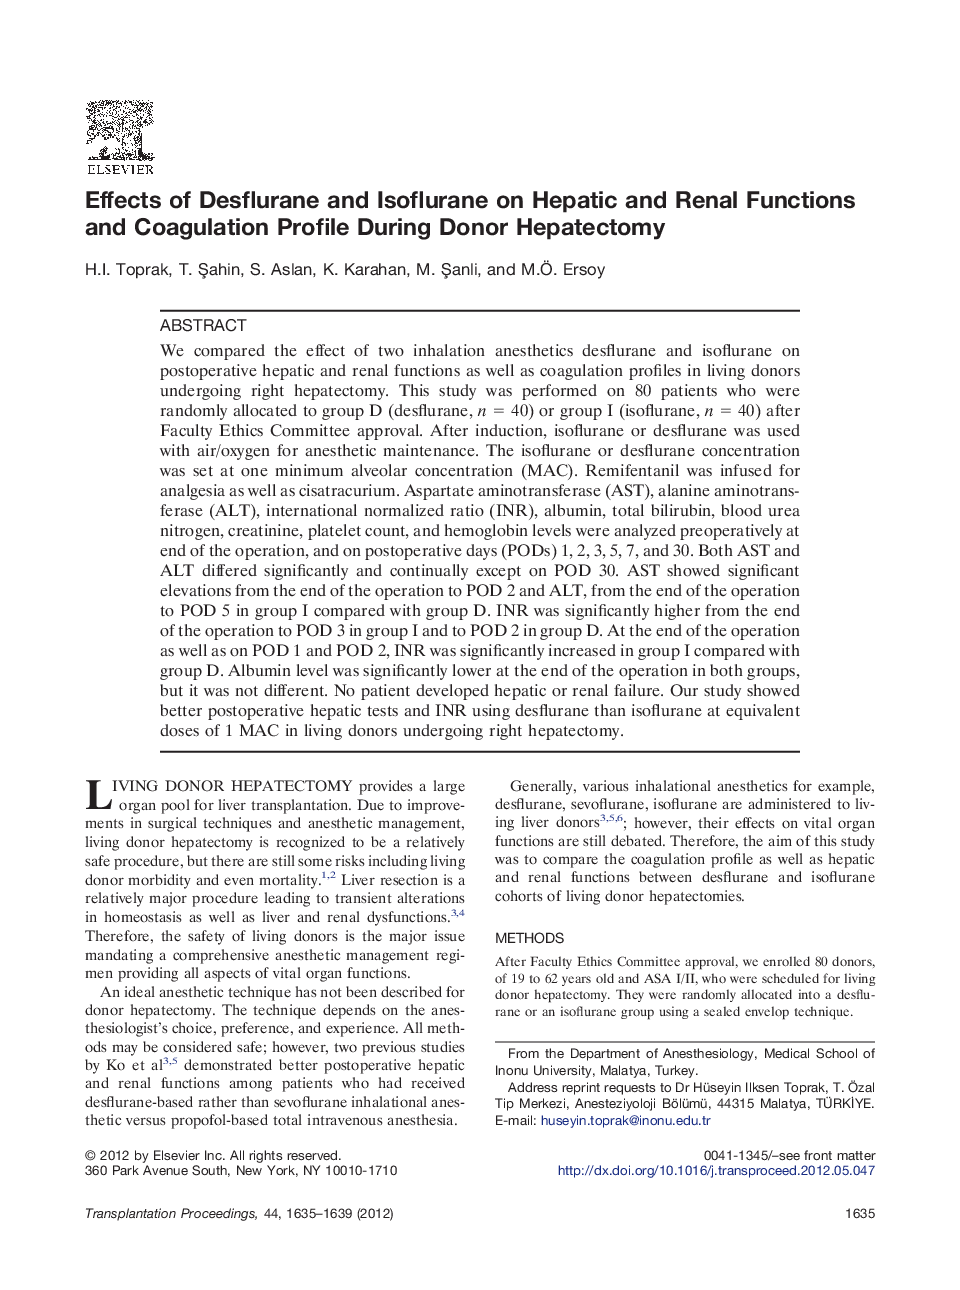 Effects of Desflurane and Isoflurane on Hepatic and Renal Functions and Coagulation Profile During Donor Hepatectomy